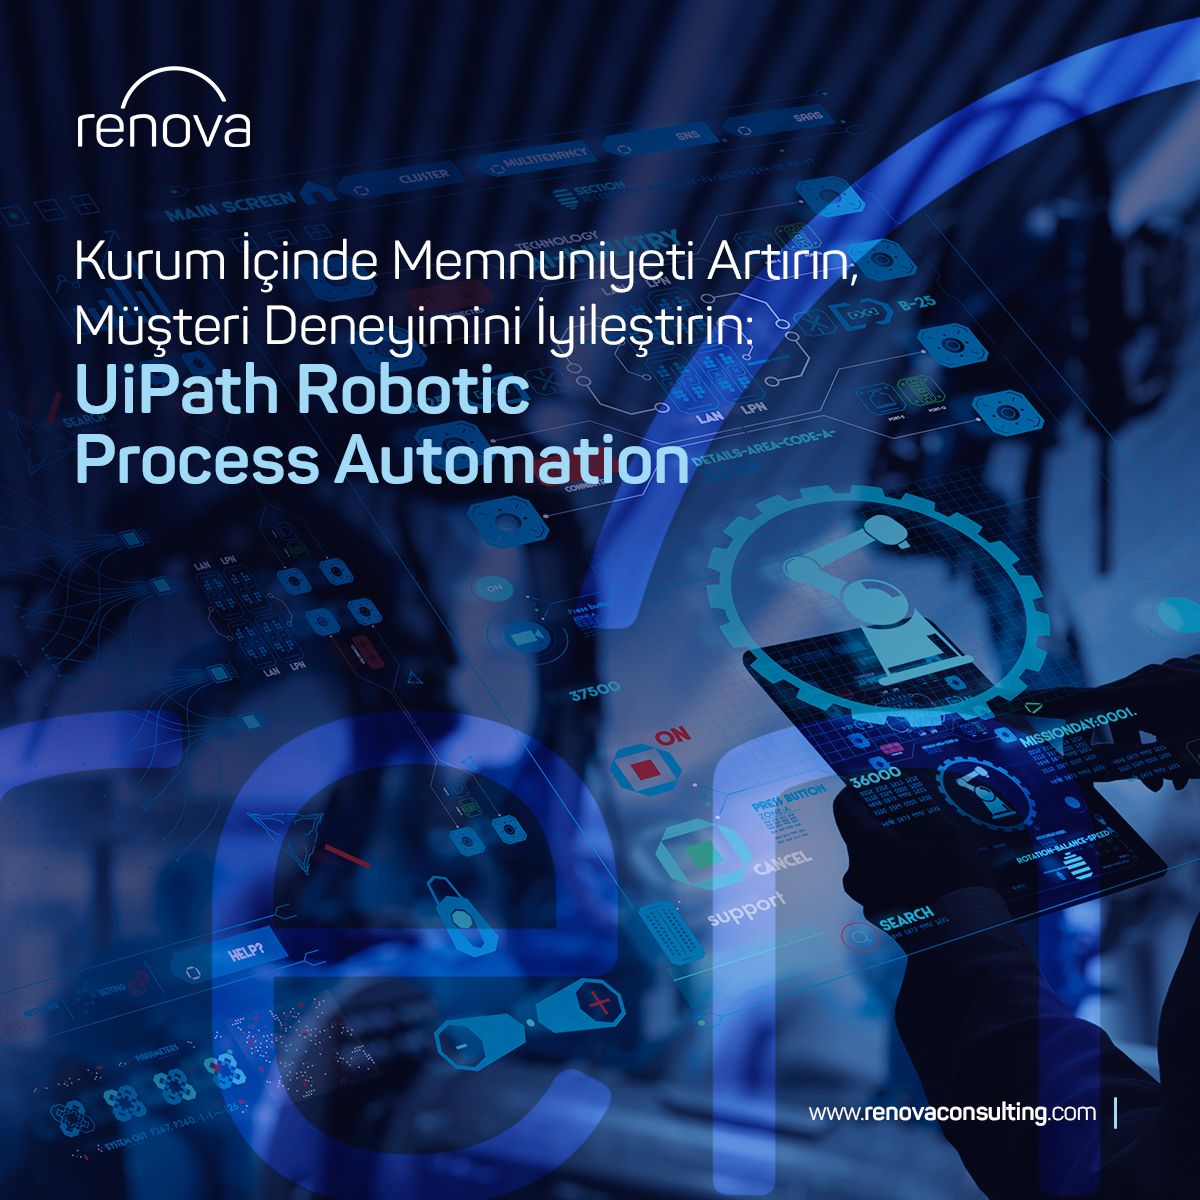 UiPath Robotic Process Automation (RPA)